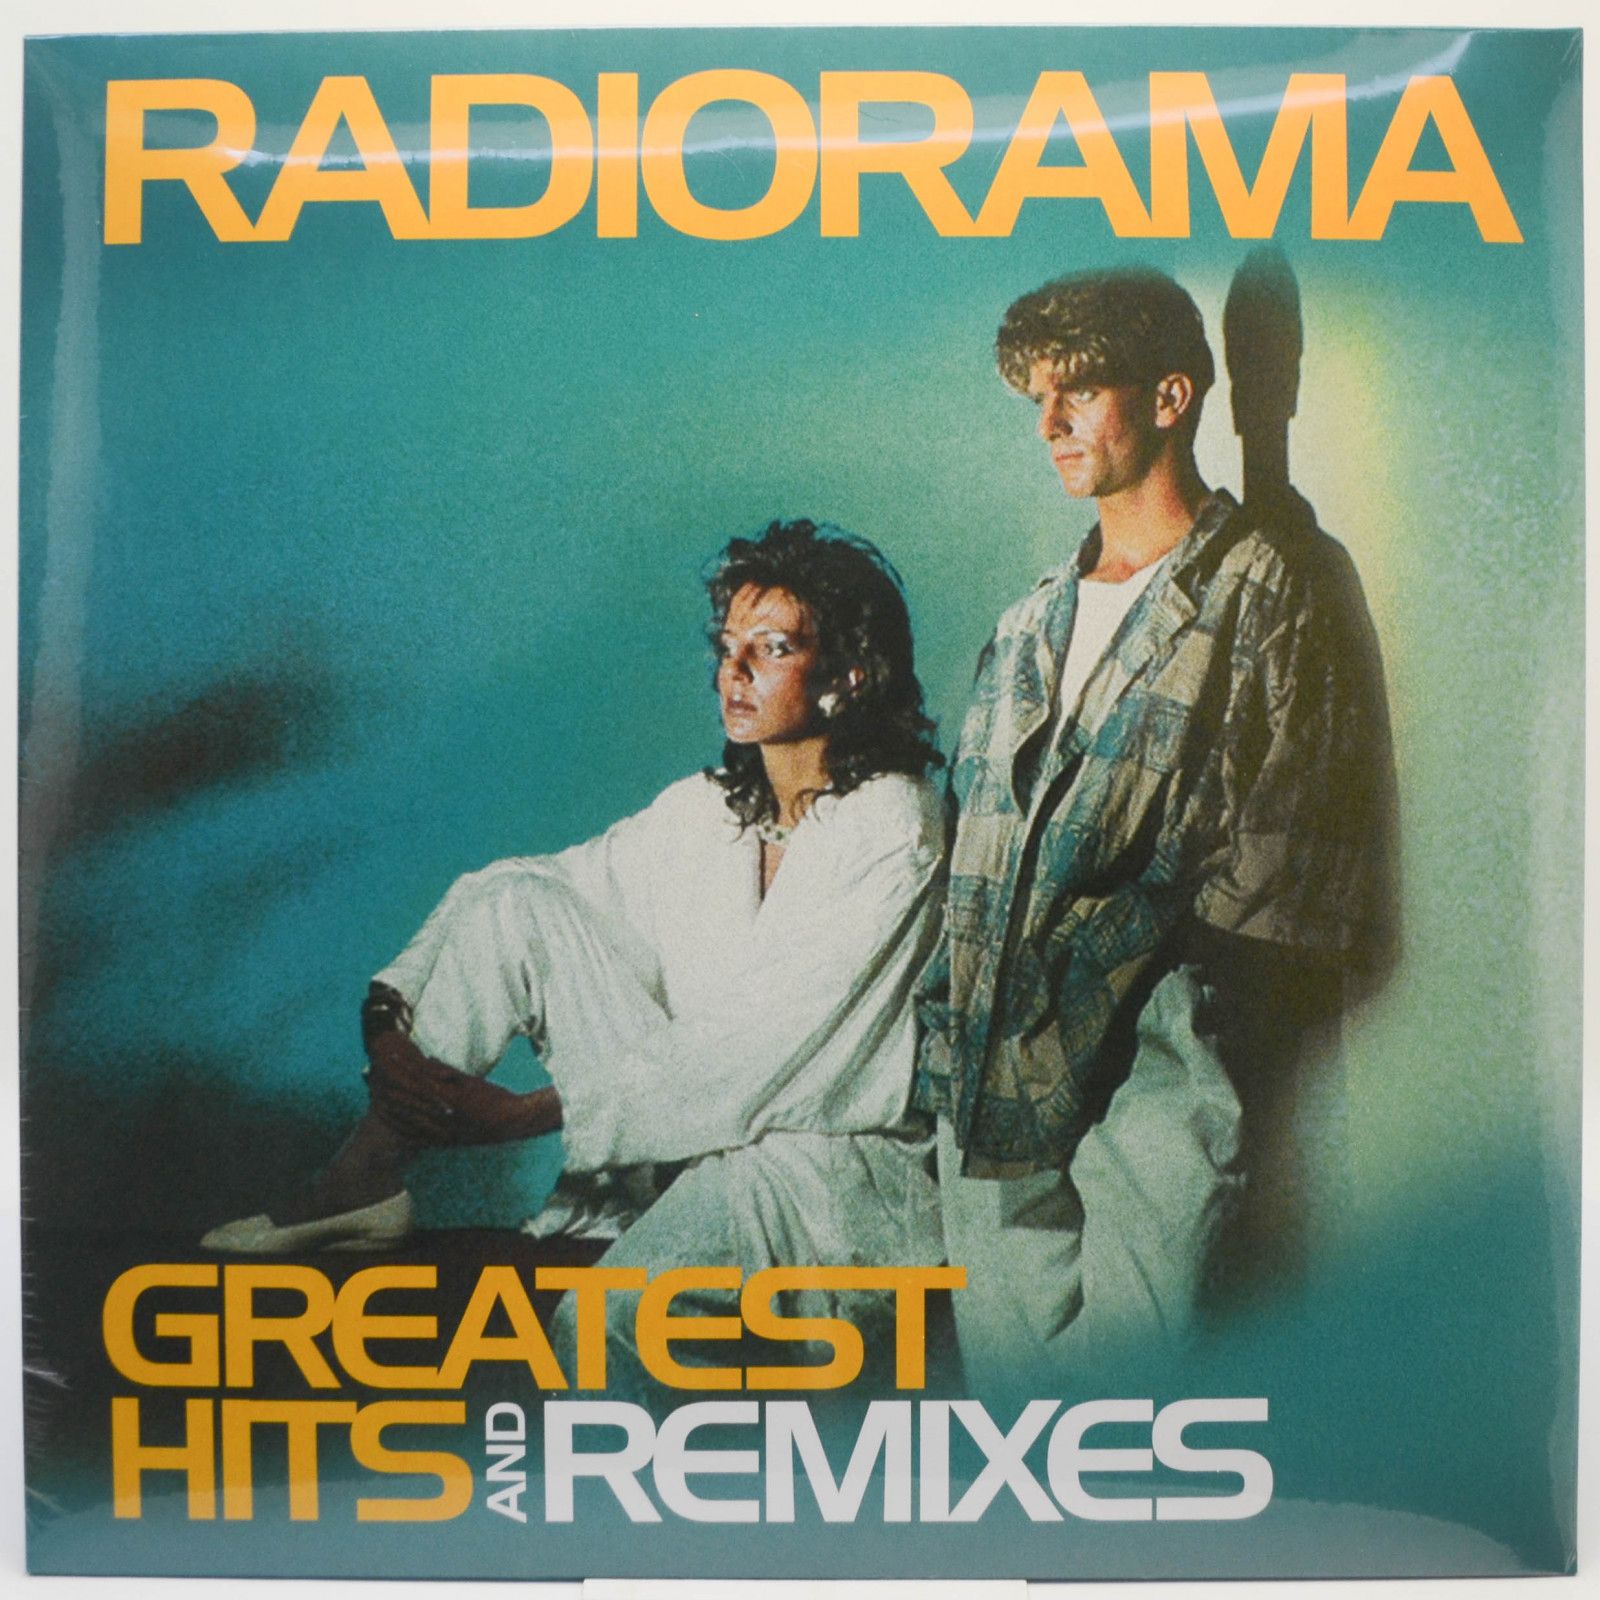 Radiorama — Greatest Hits & Remixes, 2015